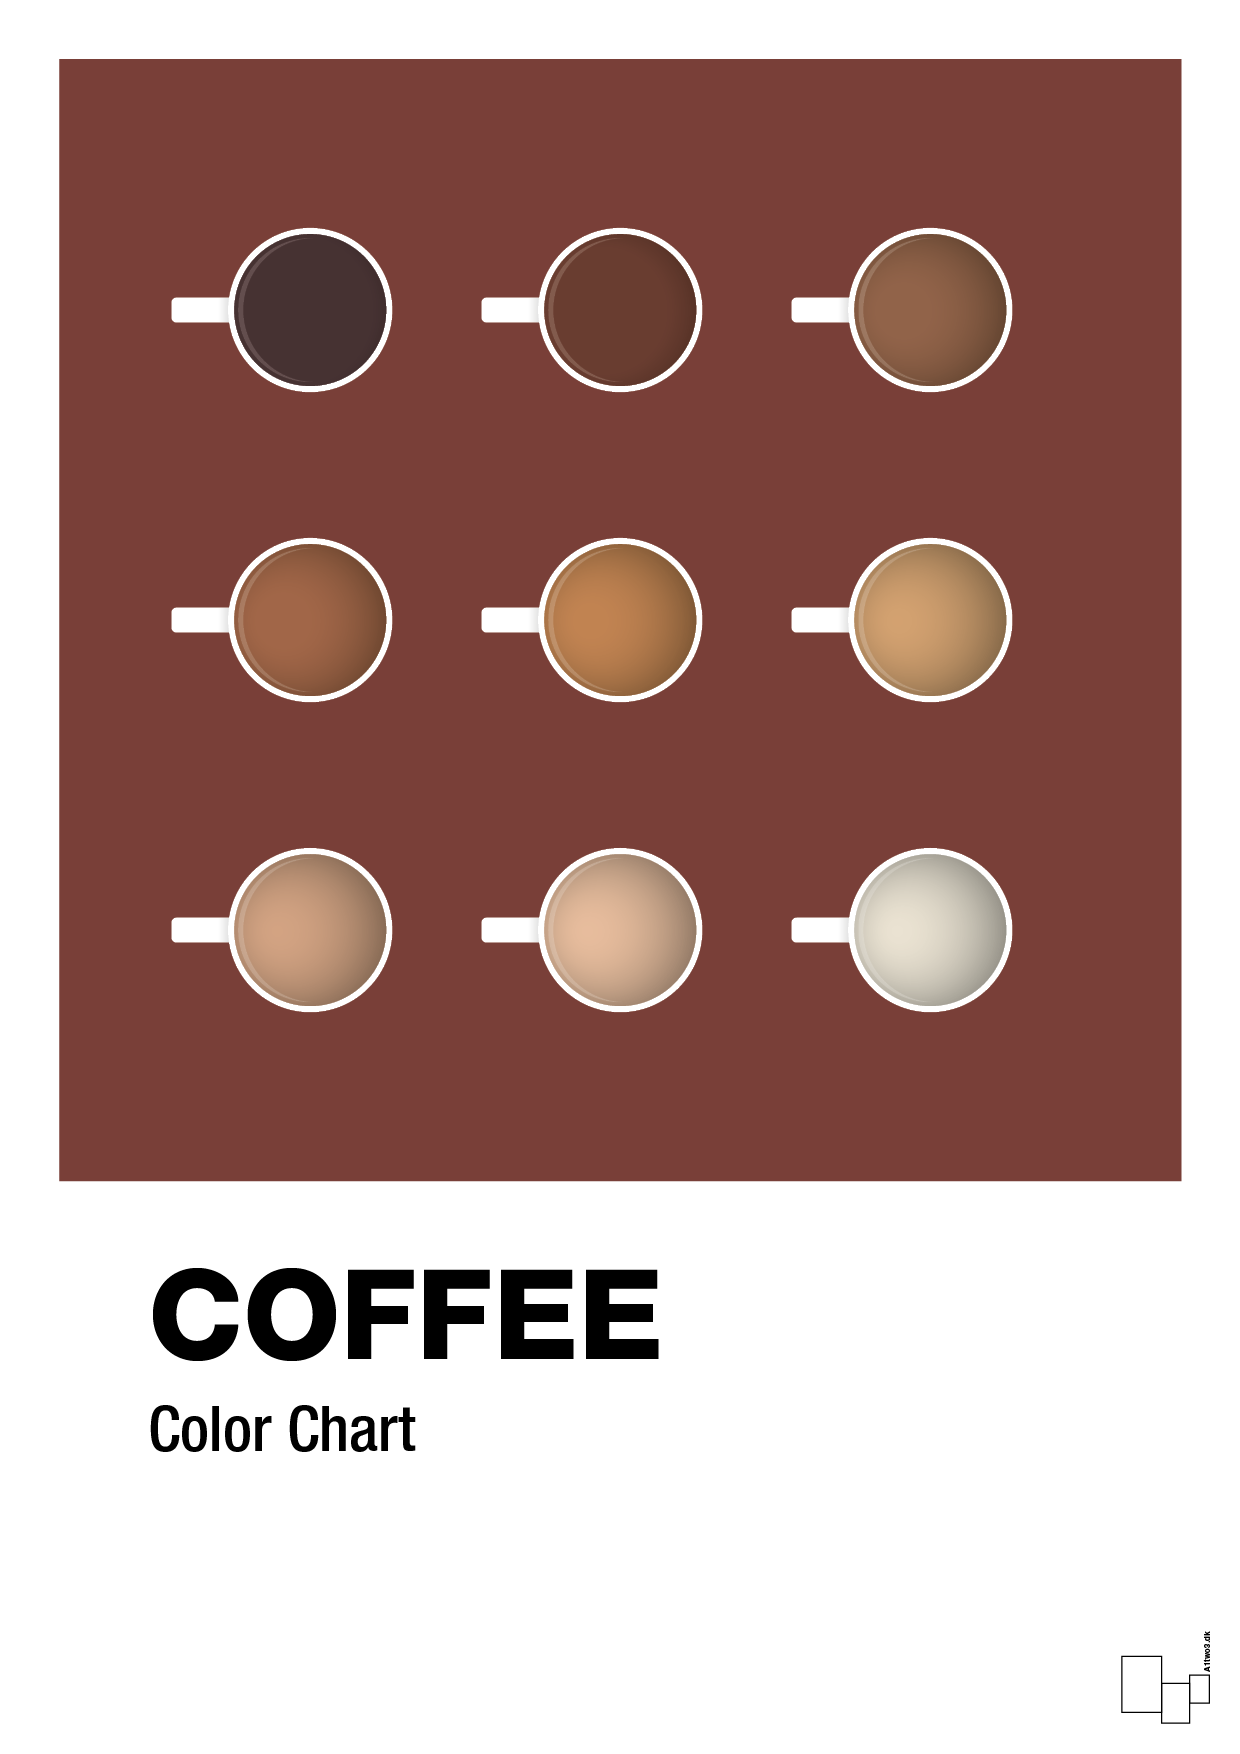 coffee color chart - Plakat med Mad & Drikke i Red Pepper